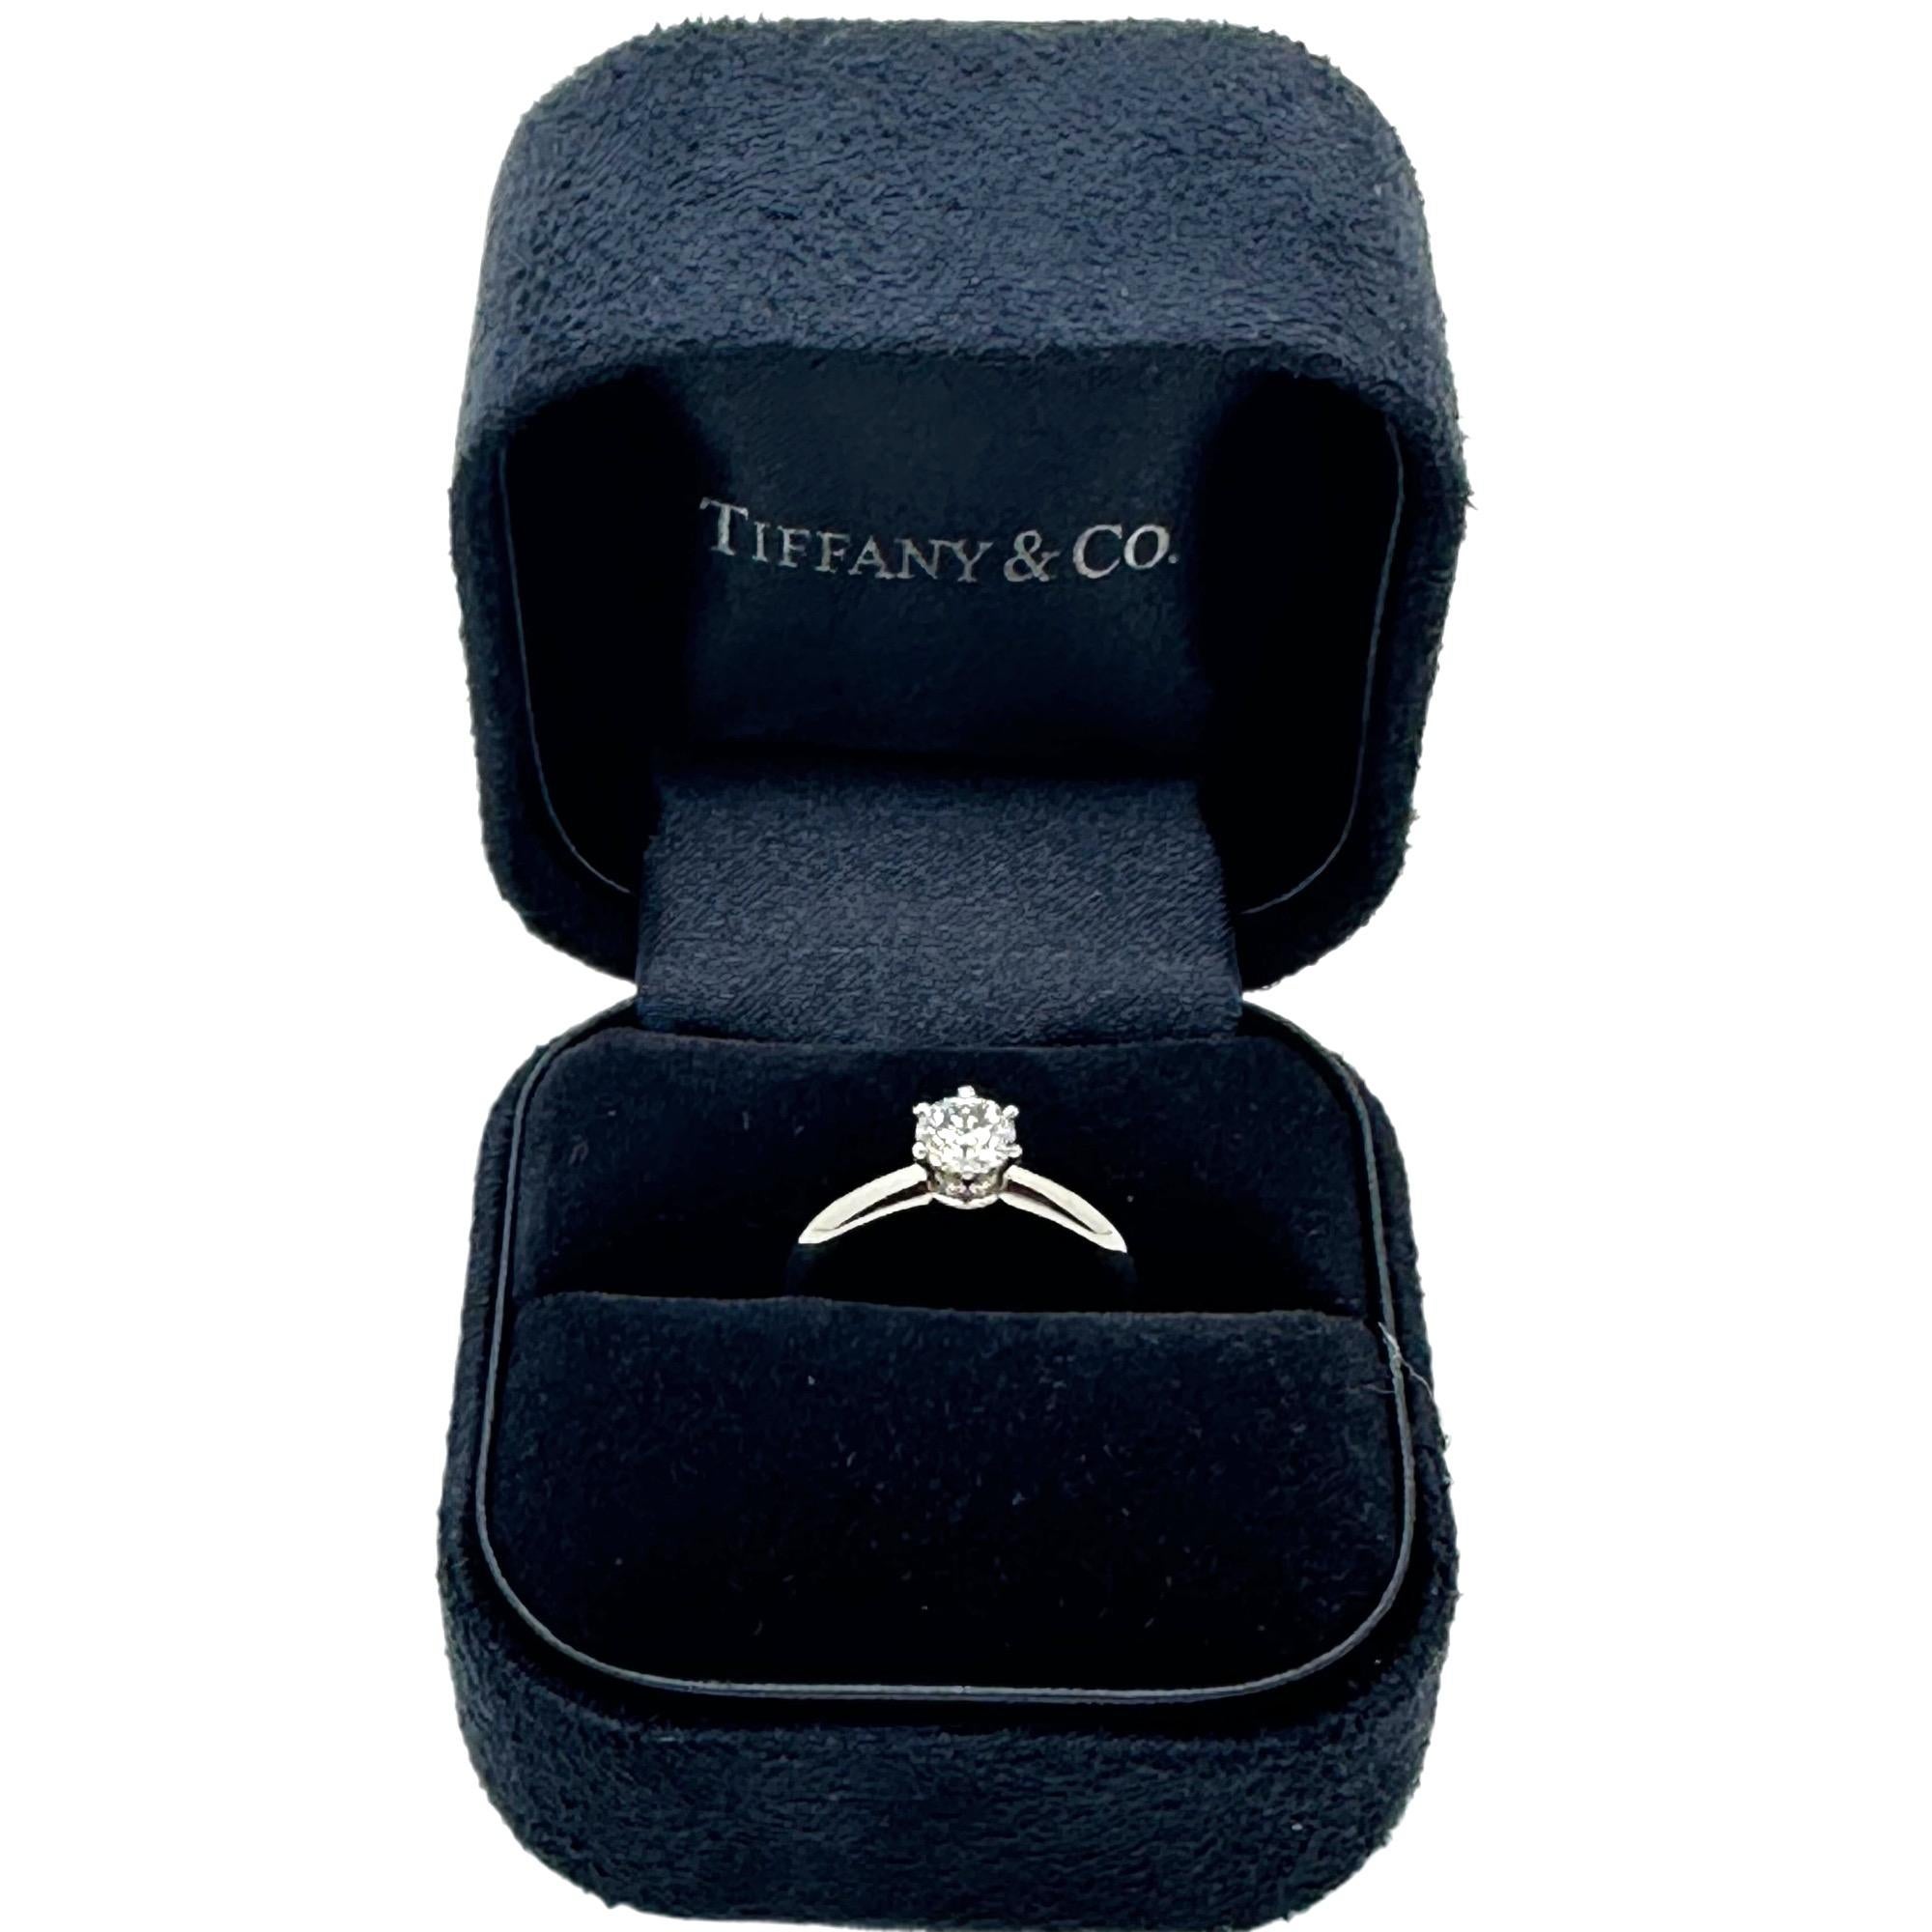 Tiffany & Co Round Brilliant Diamond Solitaire Engagement Ring
Style:  Solitaire 
Ref. number:  T42744
Metal:  Platinum Pt950
Size:  3.75
TCW:  0.41 cts
Main Diamond:  Round Brilliant Diamonds
Color & Clarity:  E - VS1
Hallmark:  TIFFANY&CO PT950